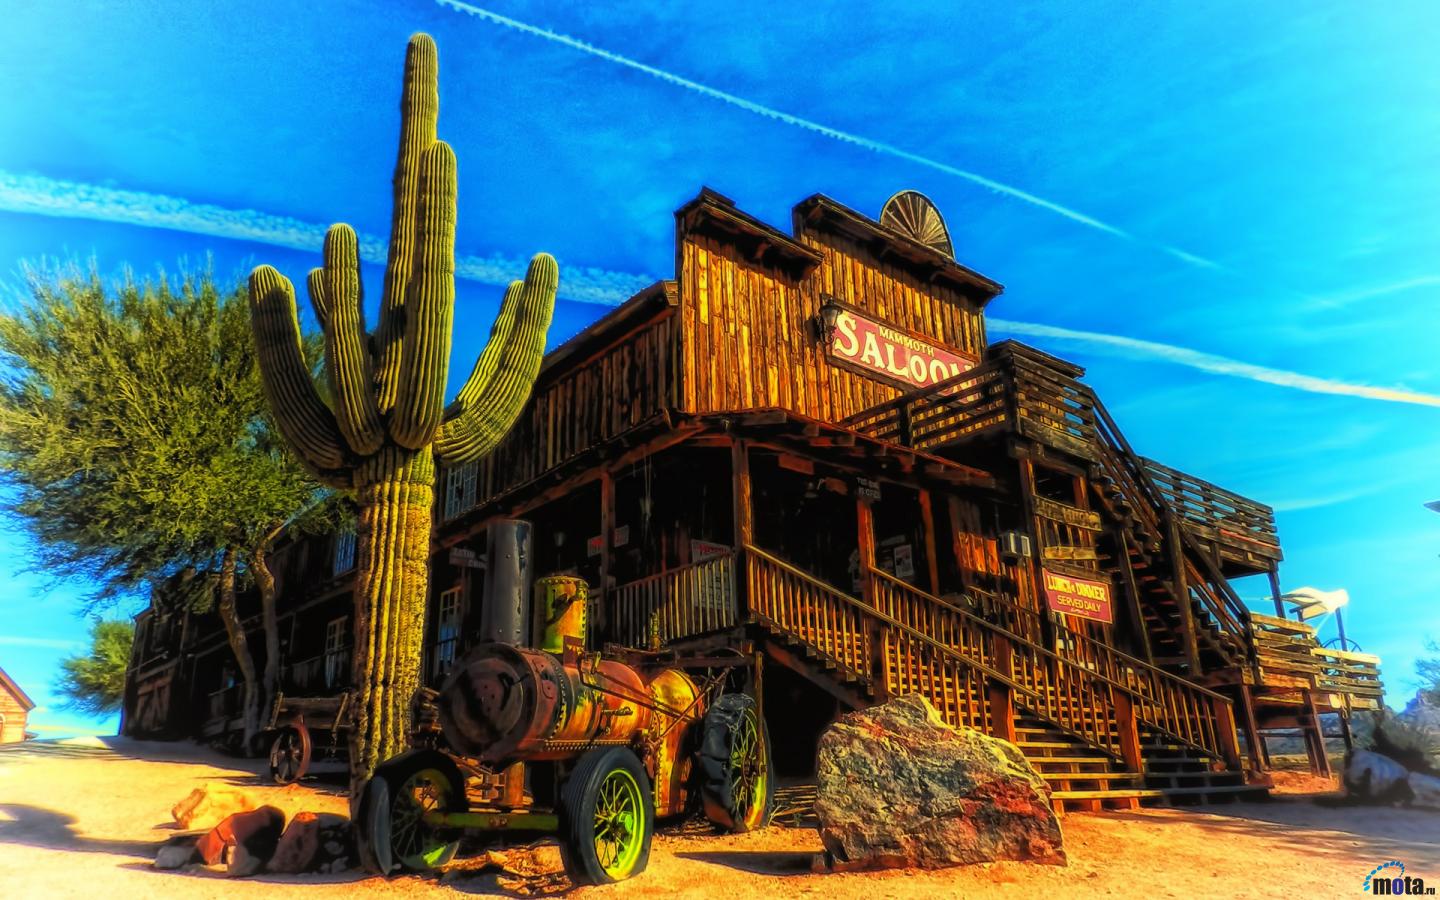 Wallpaper Saloon In The Wild West X